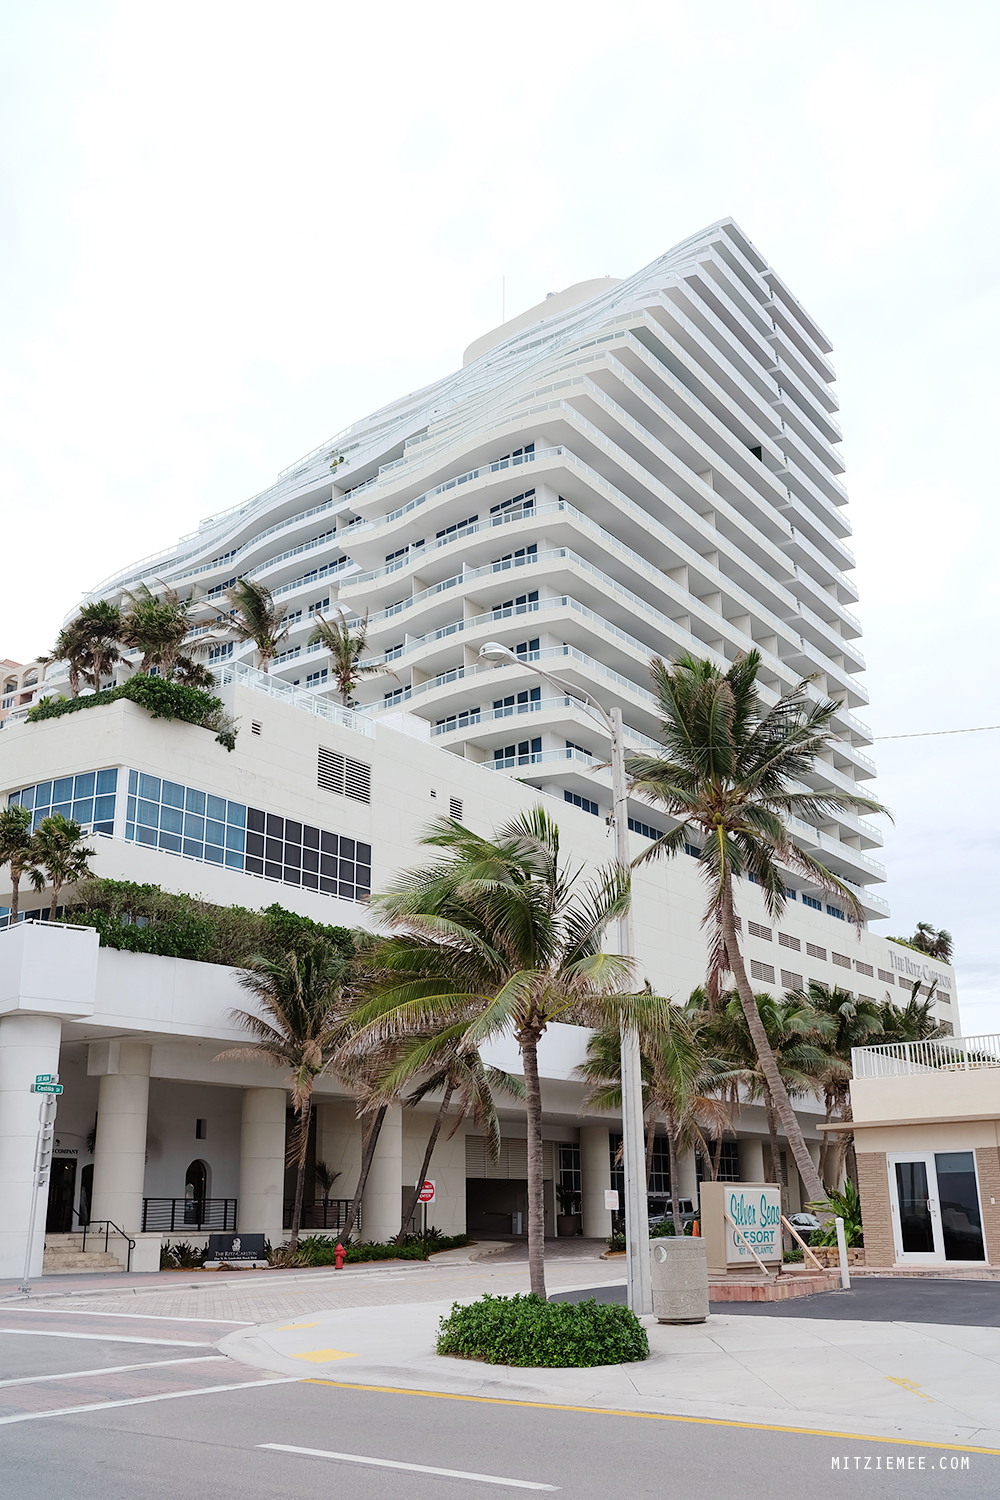 Ritz-Carlton, Fort Lauderdale